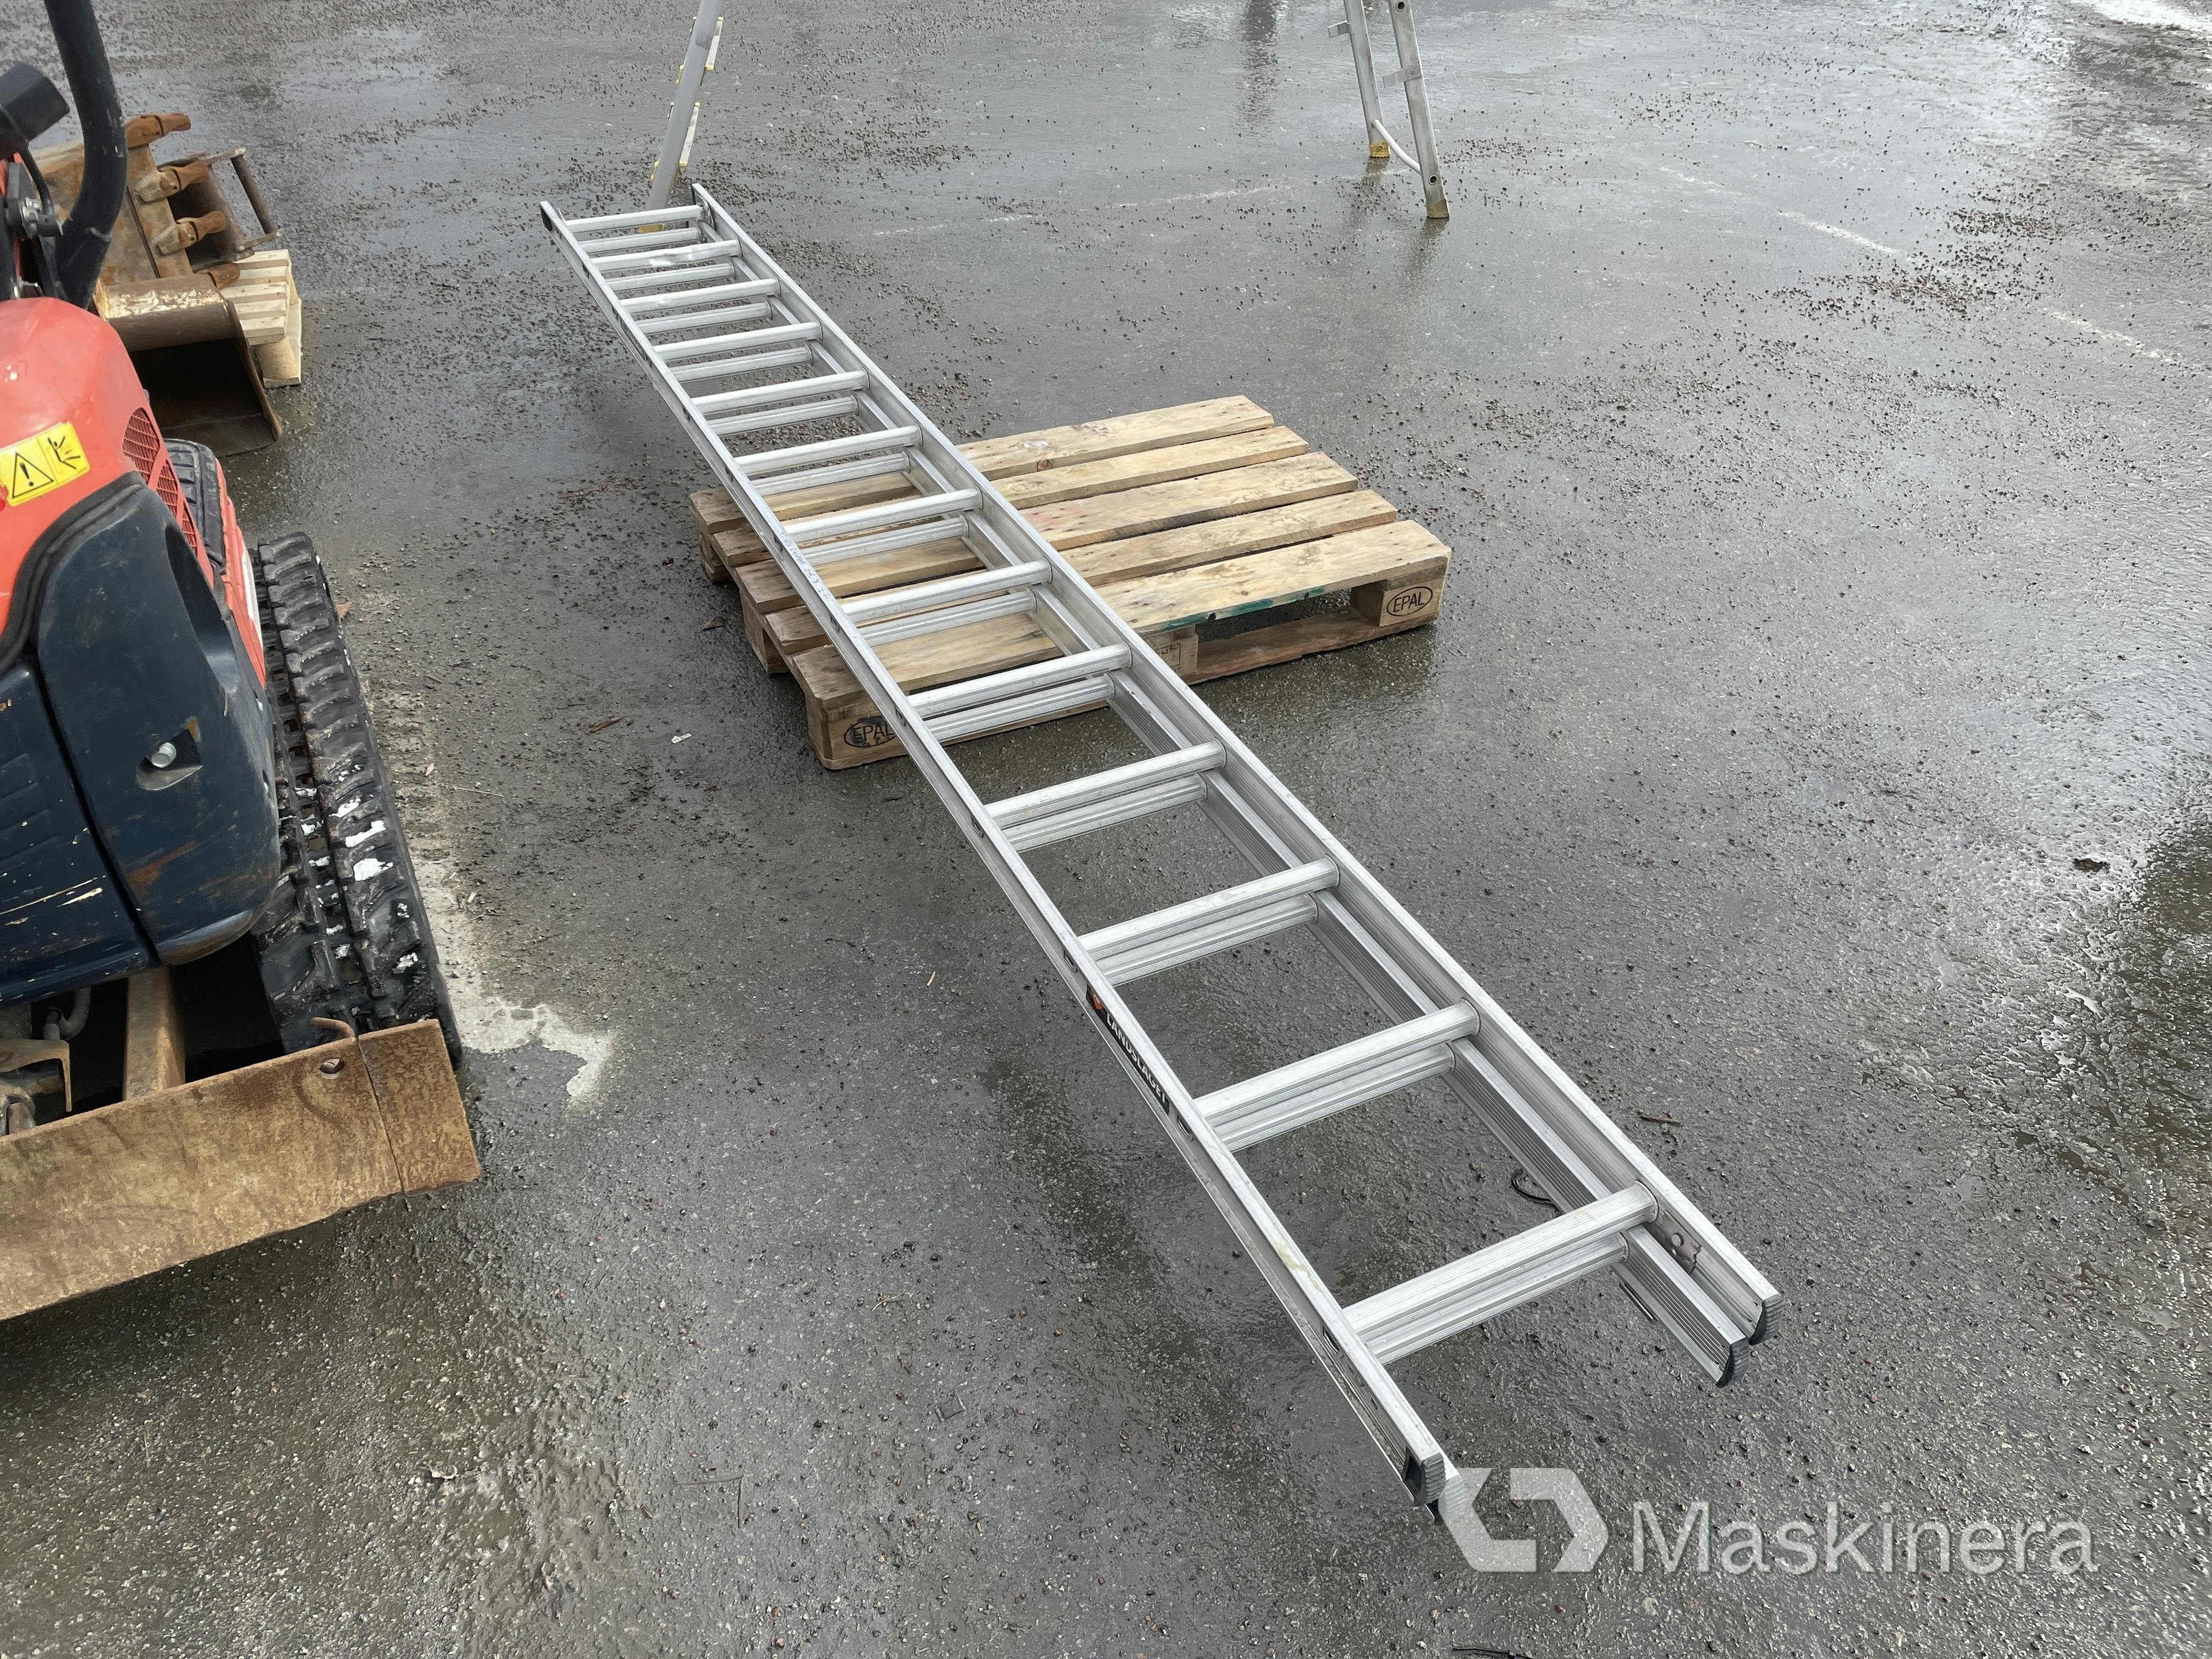 Retractable ladder 7 meters